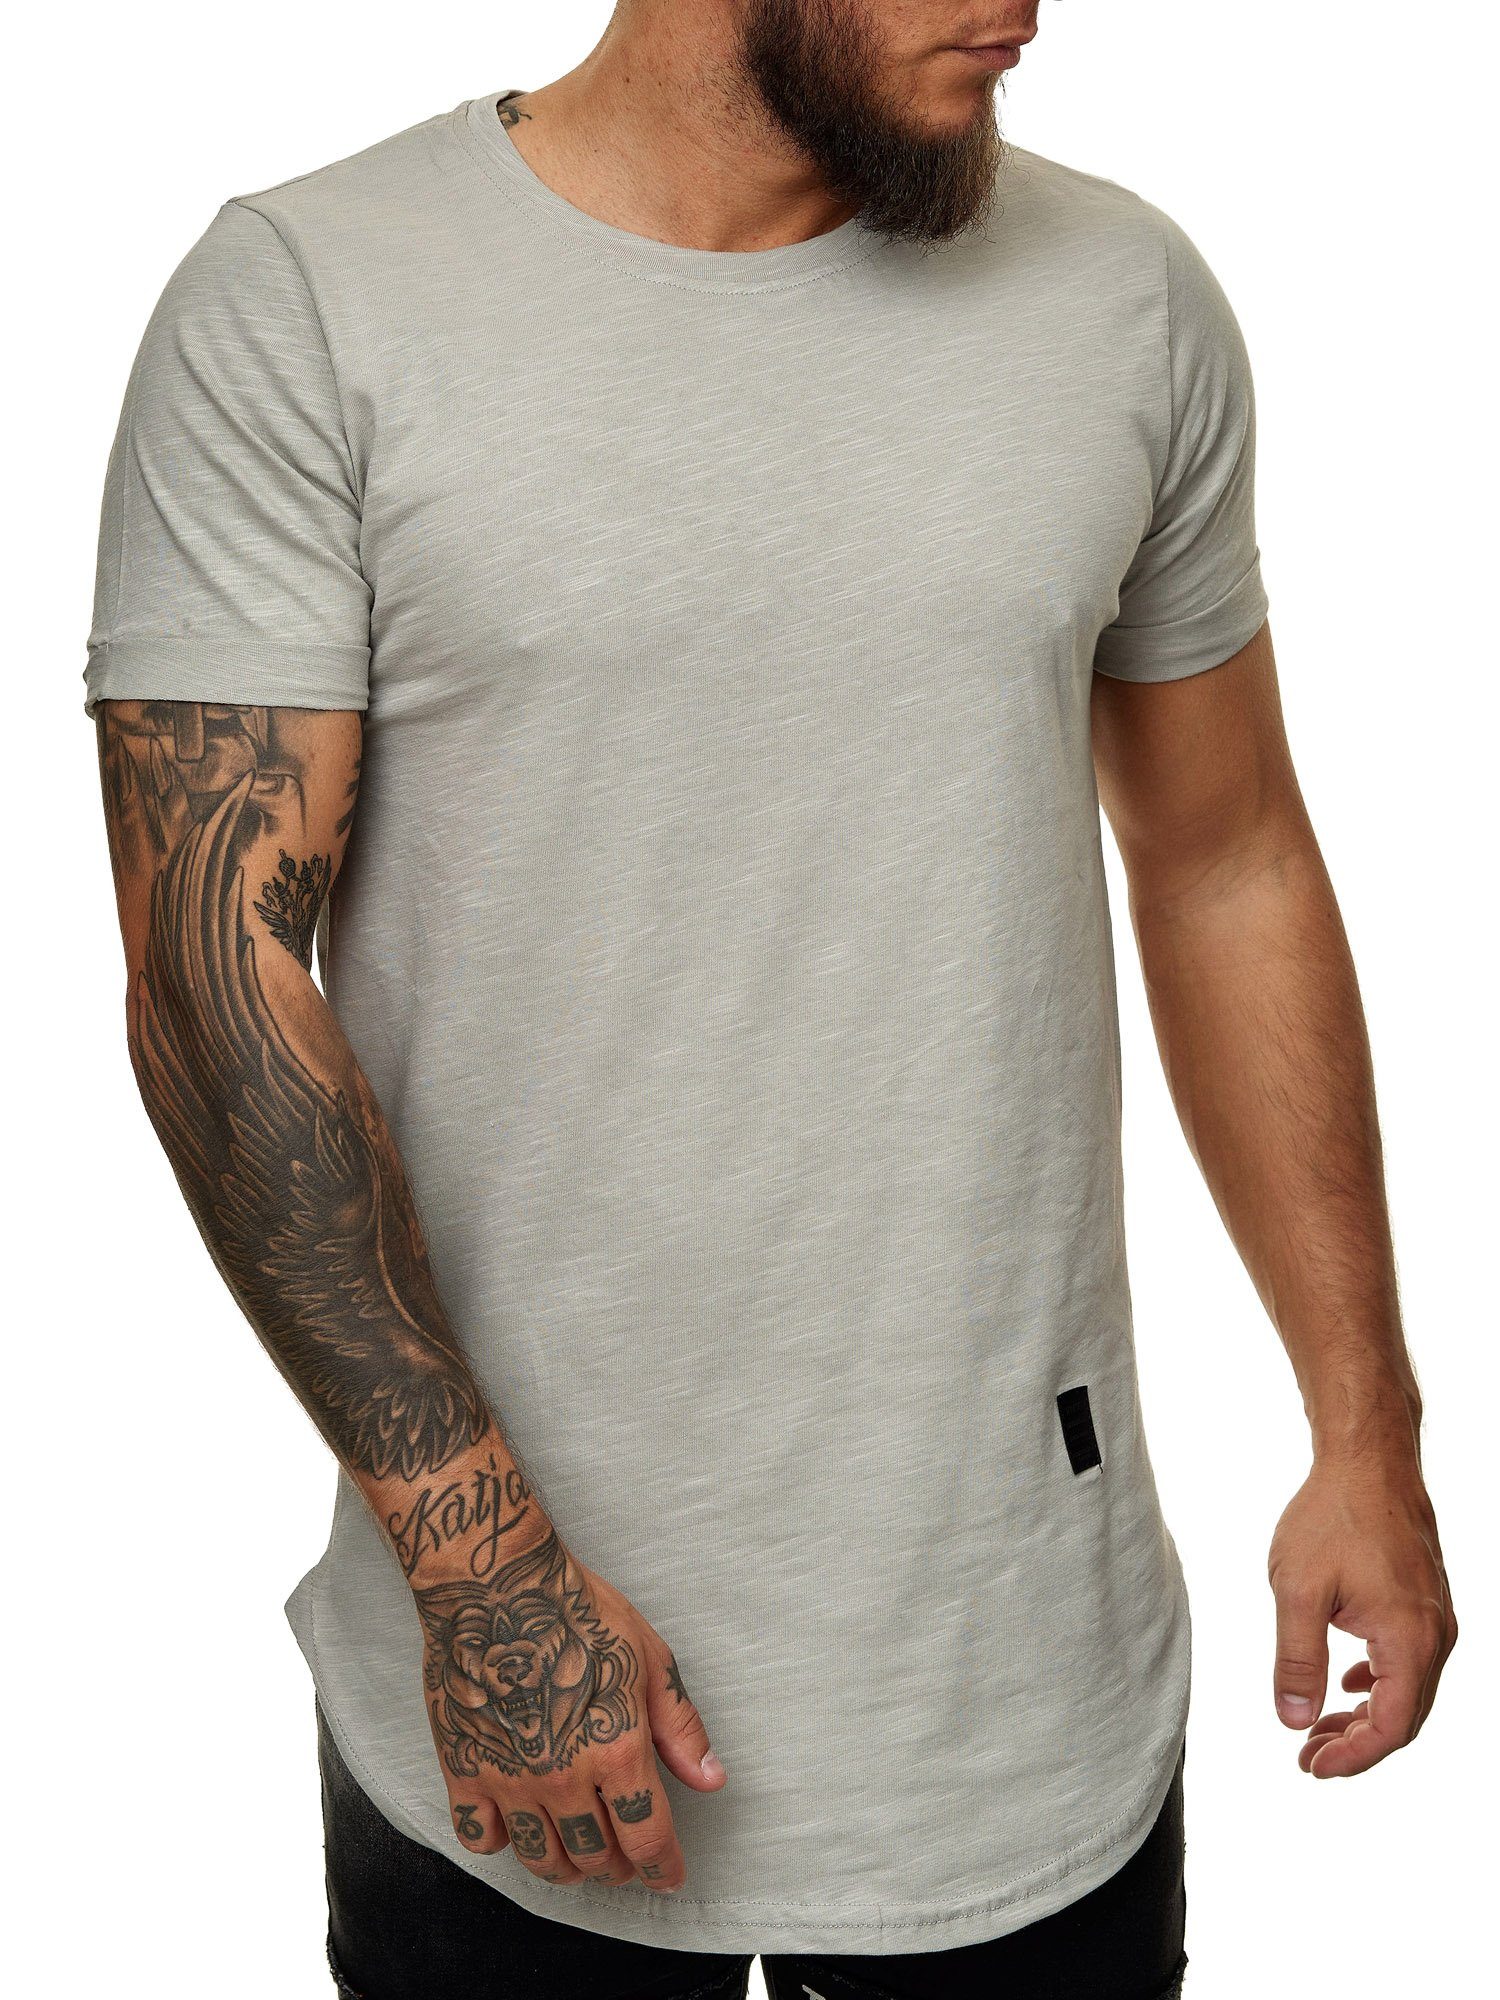 Informationen zum Versandhandel OneRedox T-Shirt TS-3659 (Shirt Polo Fitness Grau Kurzarmshirt 1-tlg) Casual Freizeit Tee